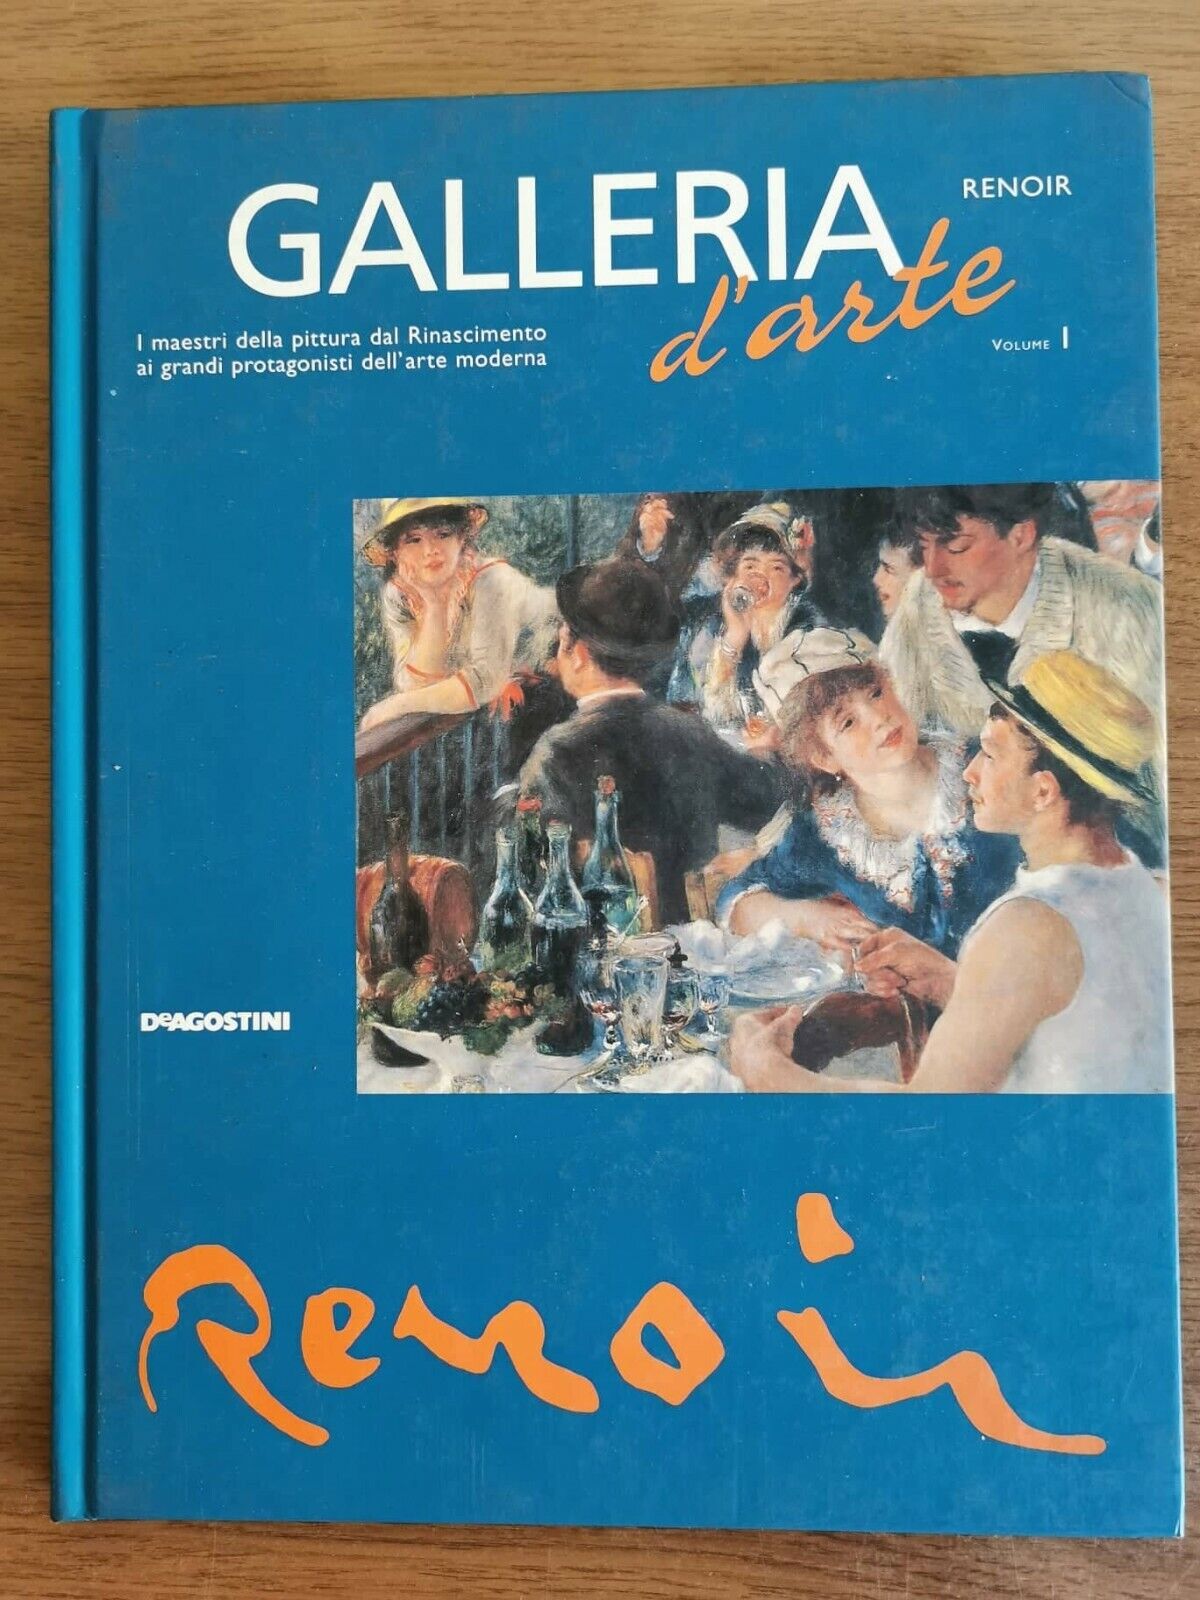 Galleria d'arte renoir vol. I - AA. VV. - DeAgostini - 2000 - AR